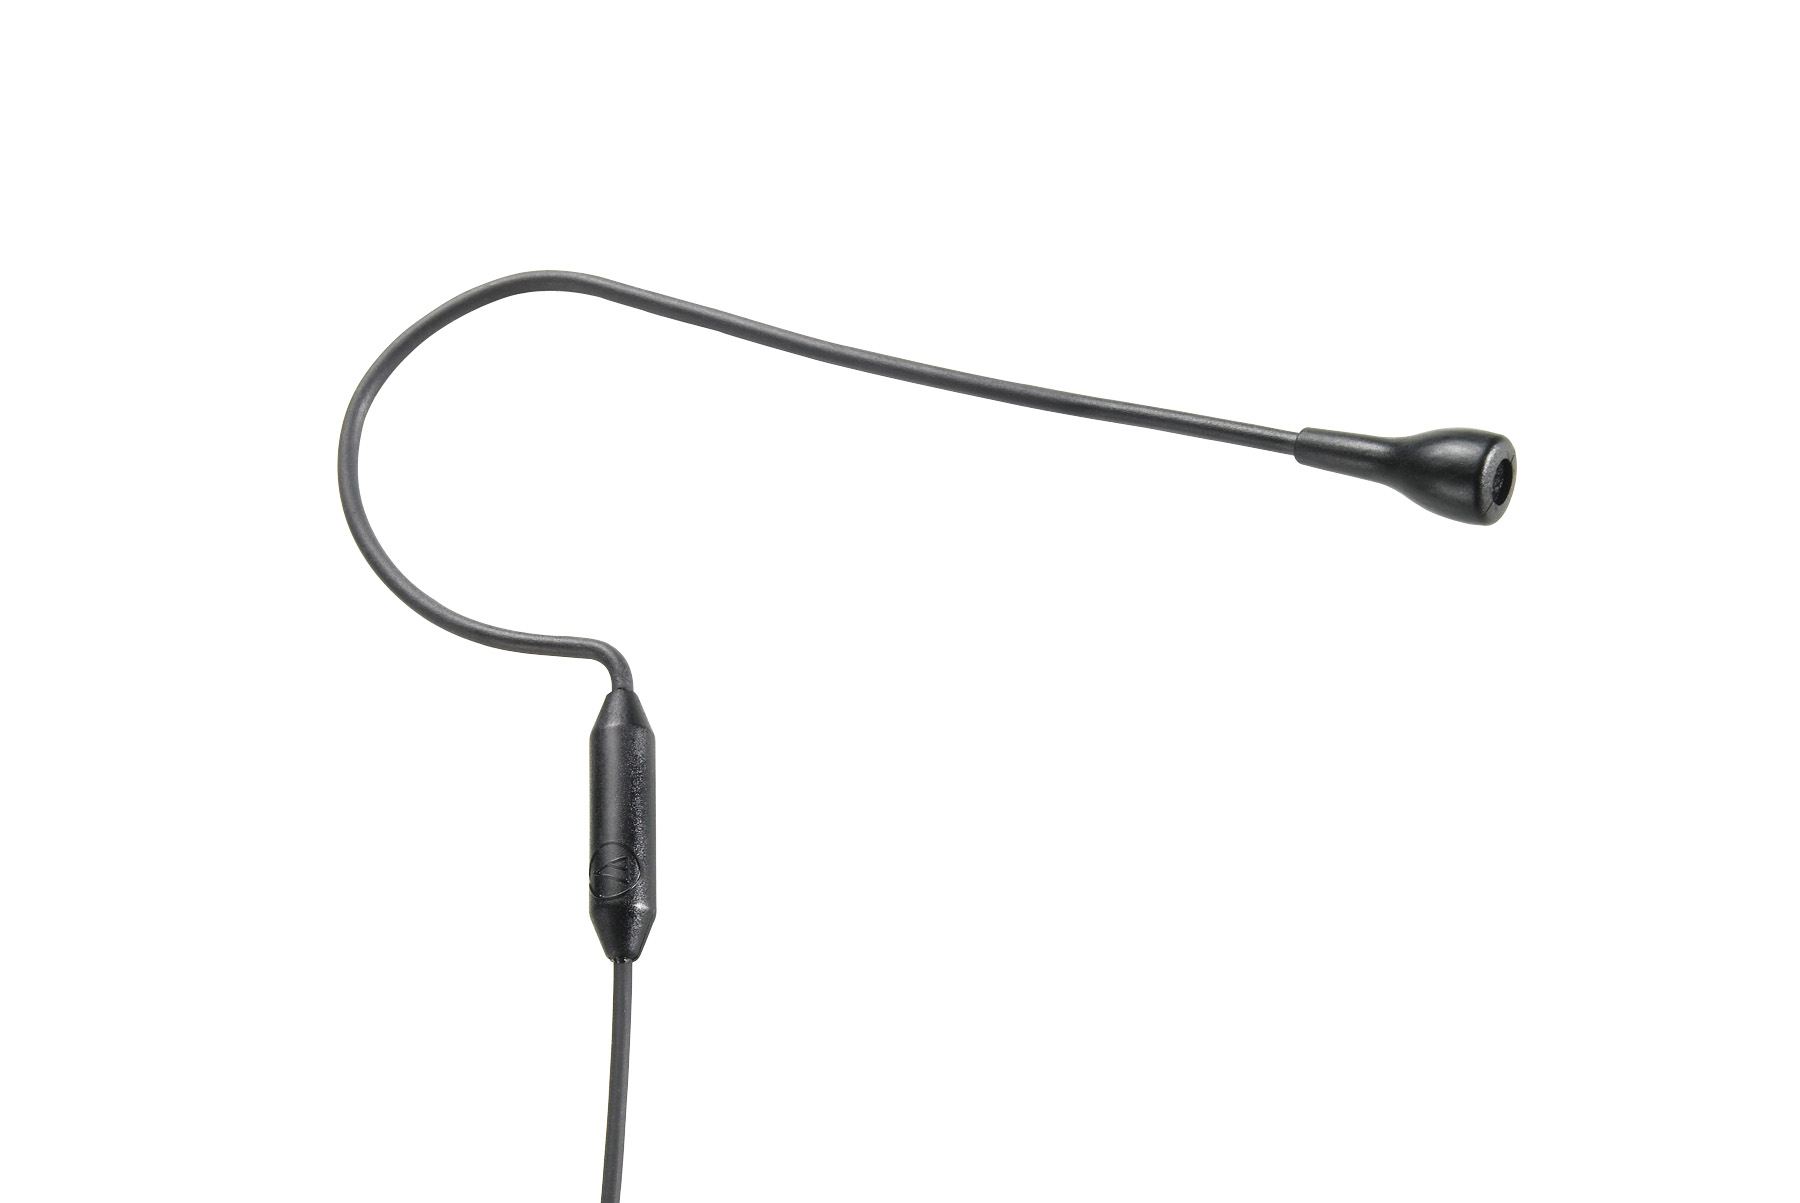 Audio-Technica Audio-Technica PRO92CW Wireless Microphone, Headset - Black